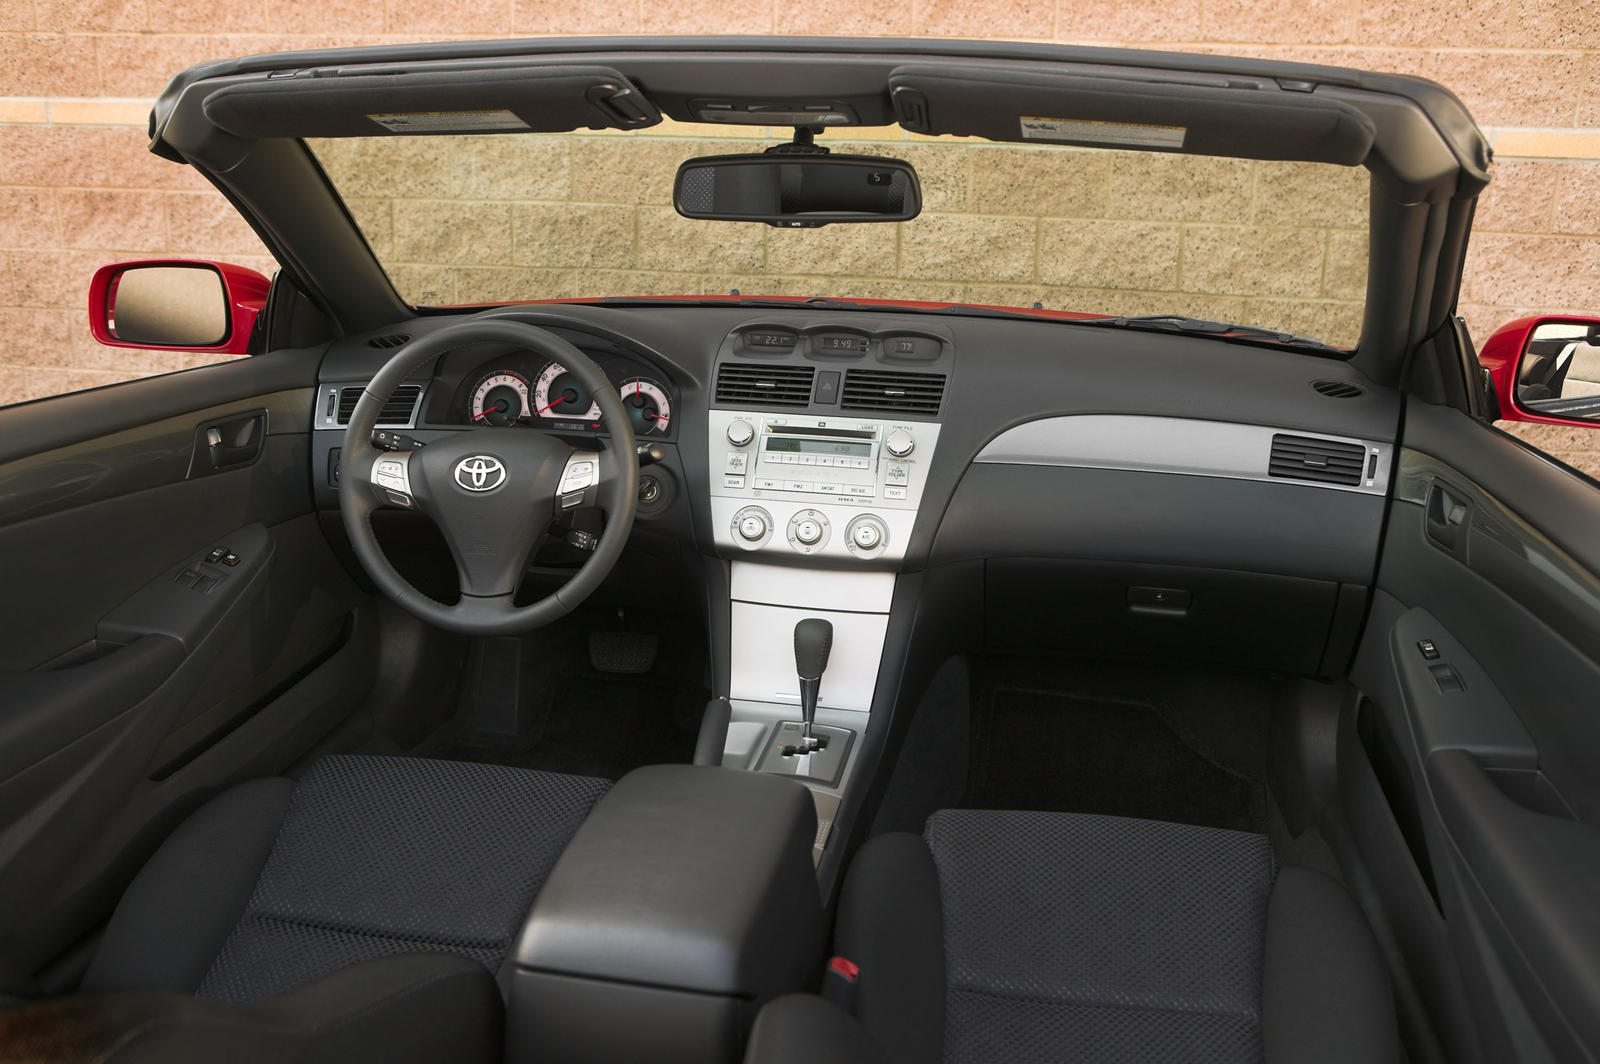 Toyota Solara interior - Cockpit